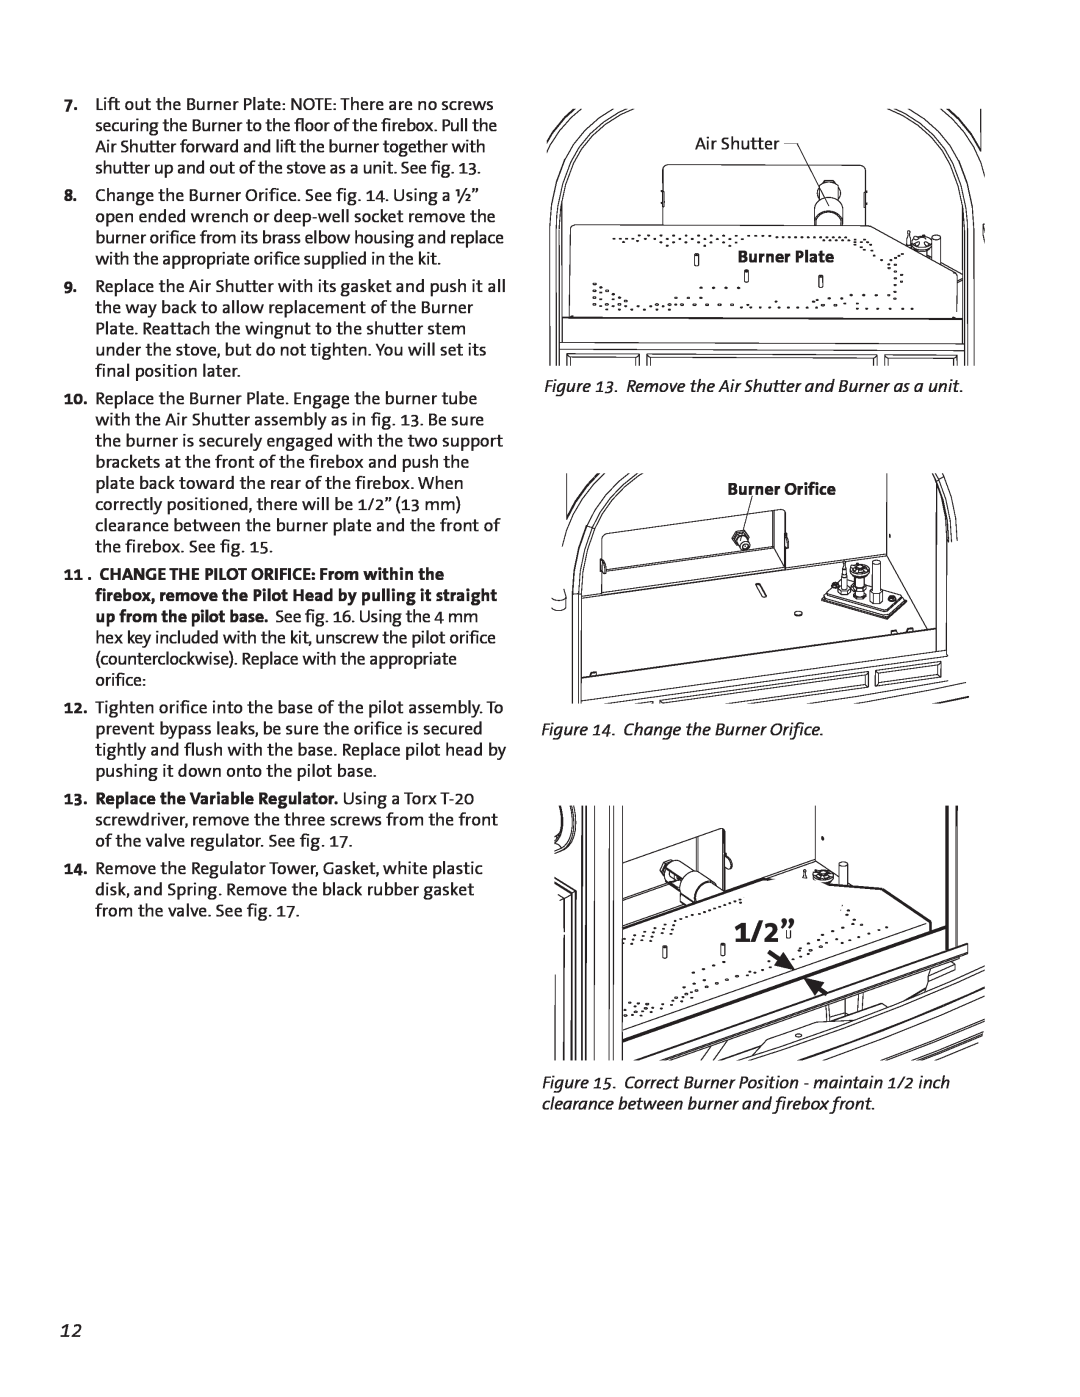 Jotul GF300 BV manual 1/2”, CHANGE THE PILOT ORIFICE From within the, Burner Plate, Change the Burner Orifice 